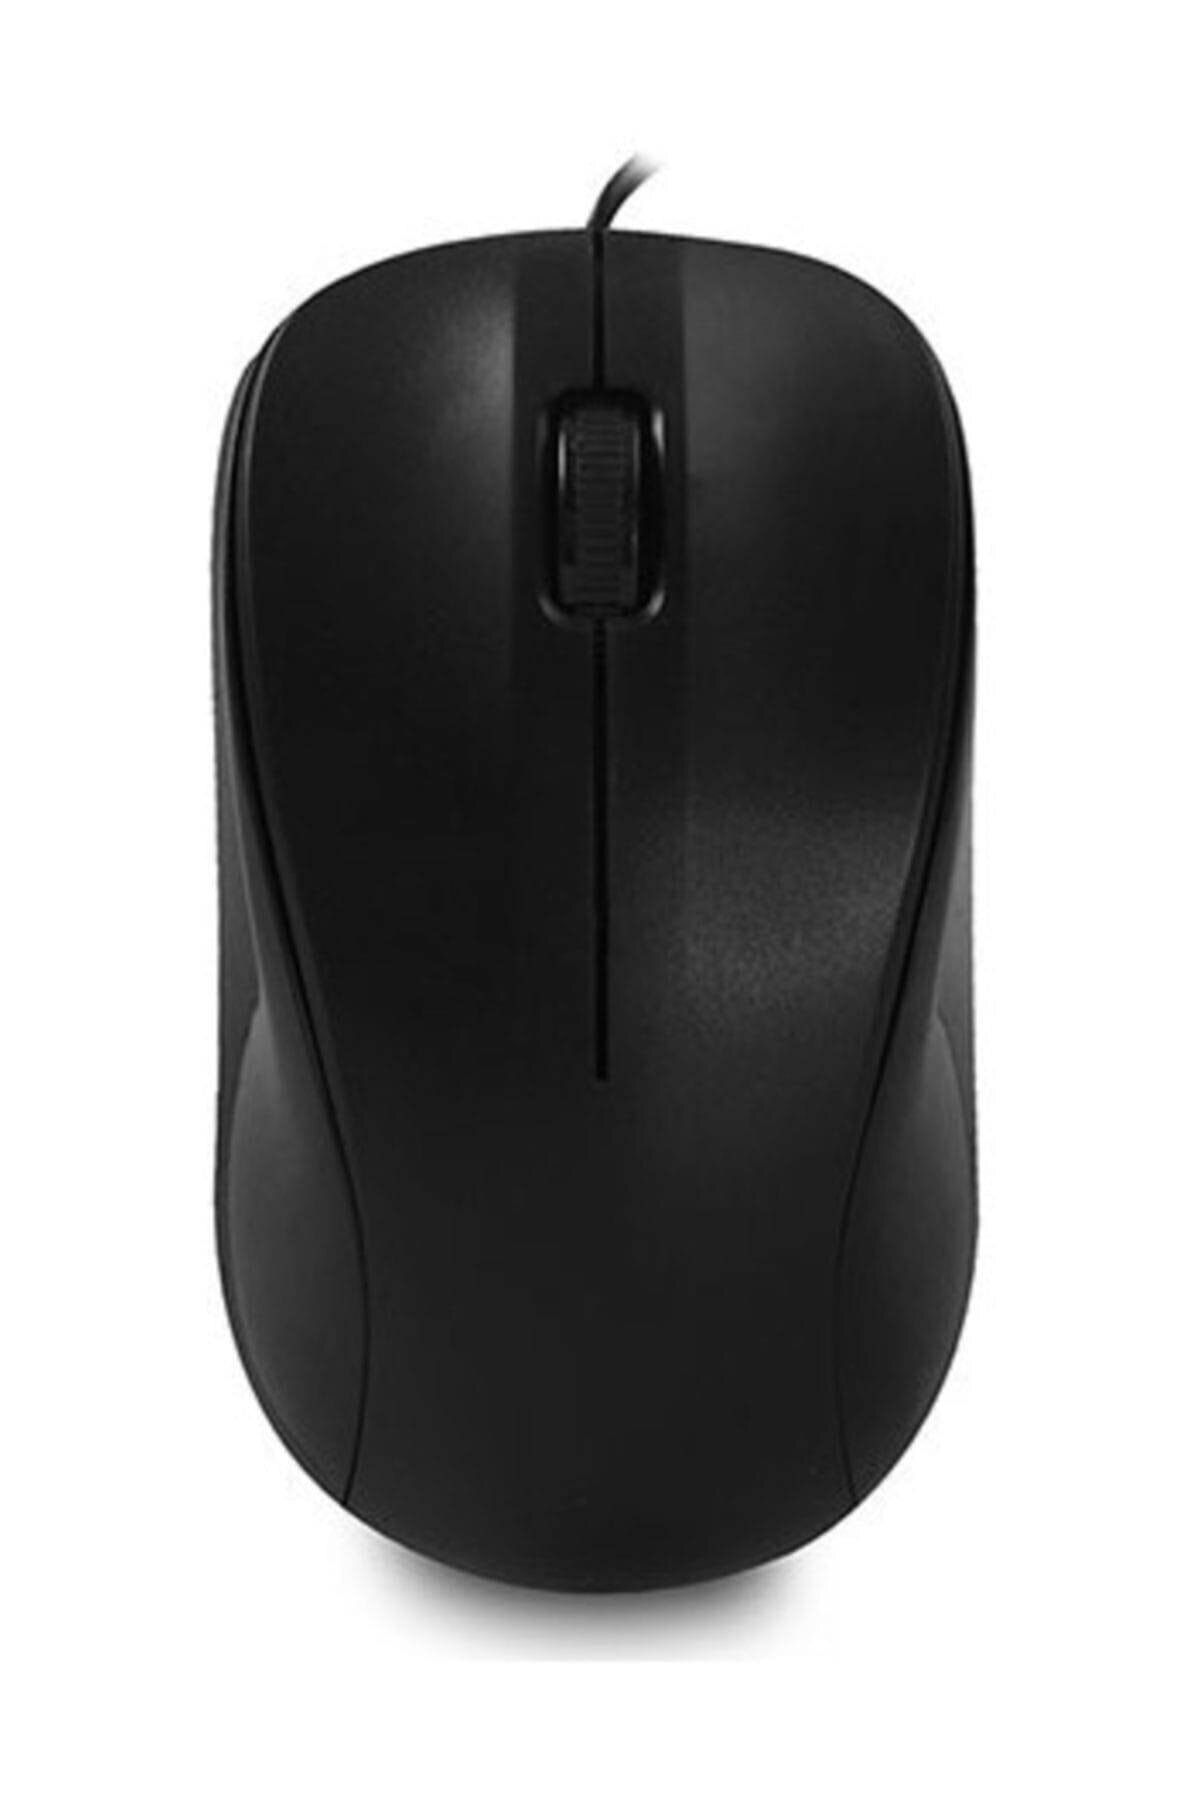 Everest Sm-215 Usb Siyah 1.5m Usb Kablolu Mouse